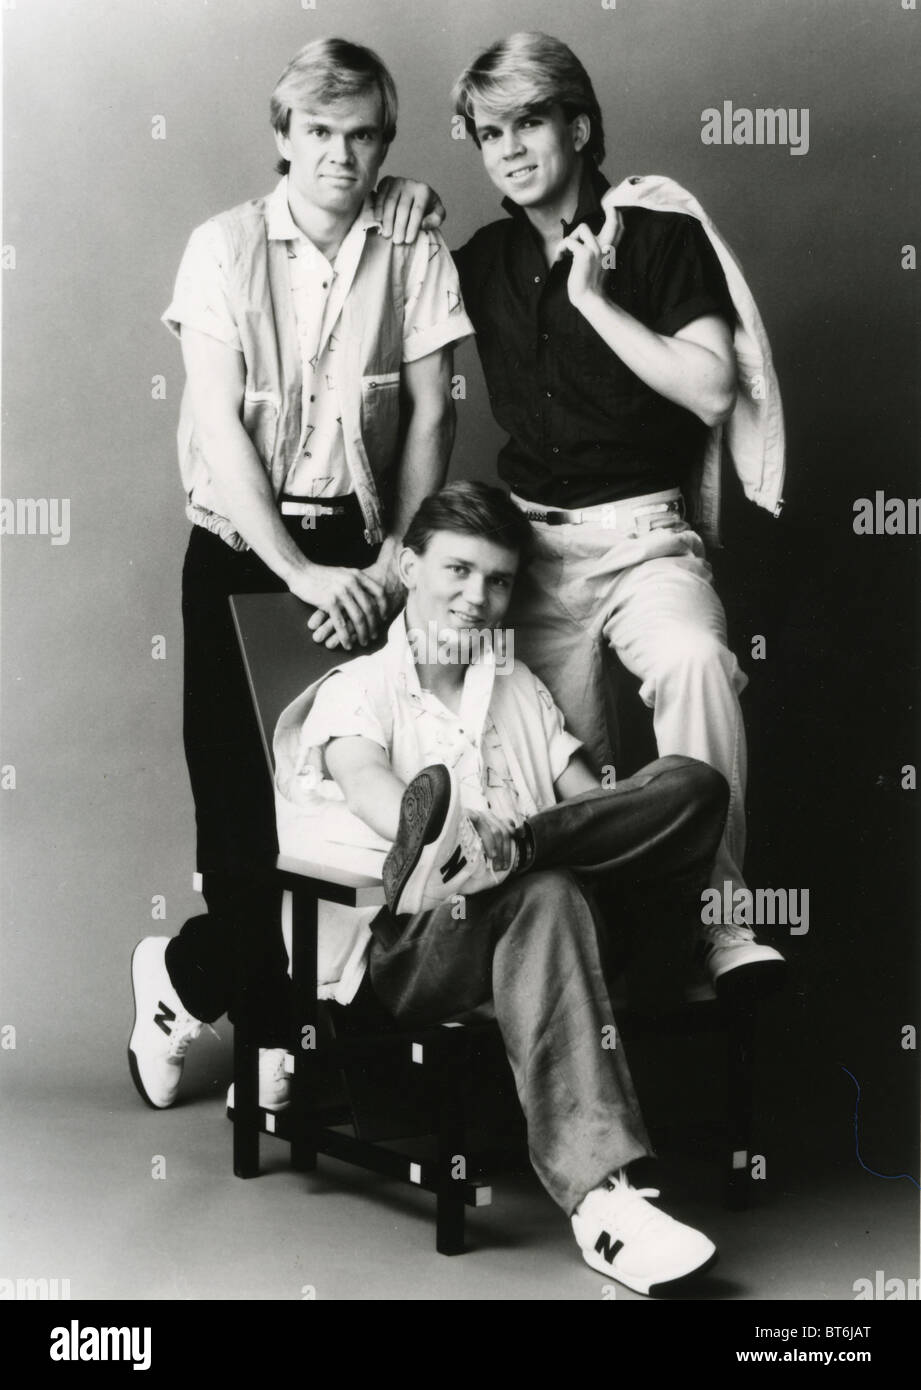 HERREYS foto promocional del grupo de pop sueco acerca de 1982 Foto de stock